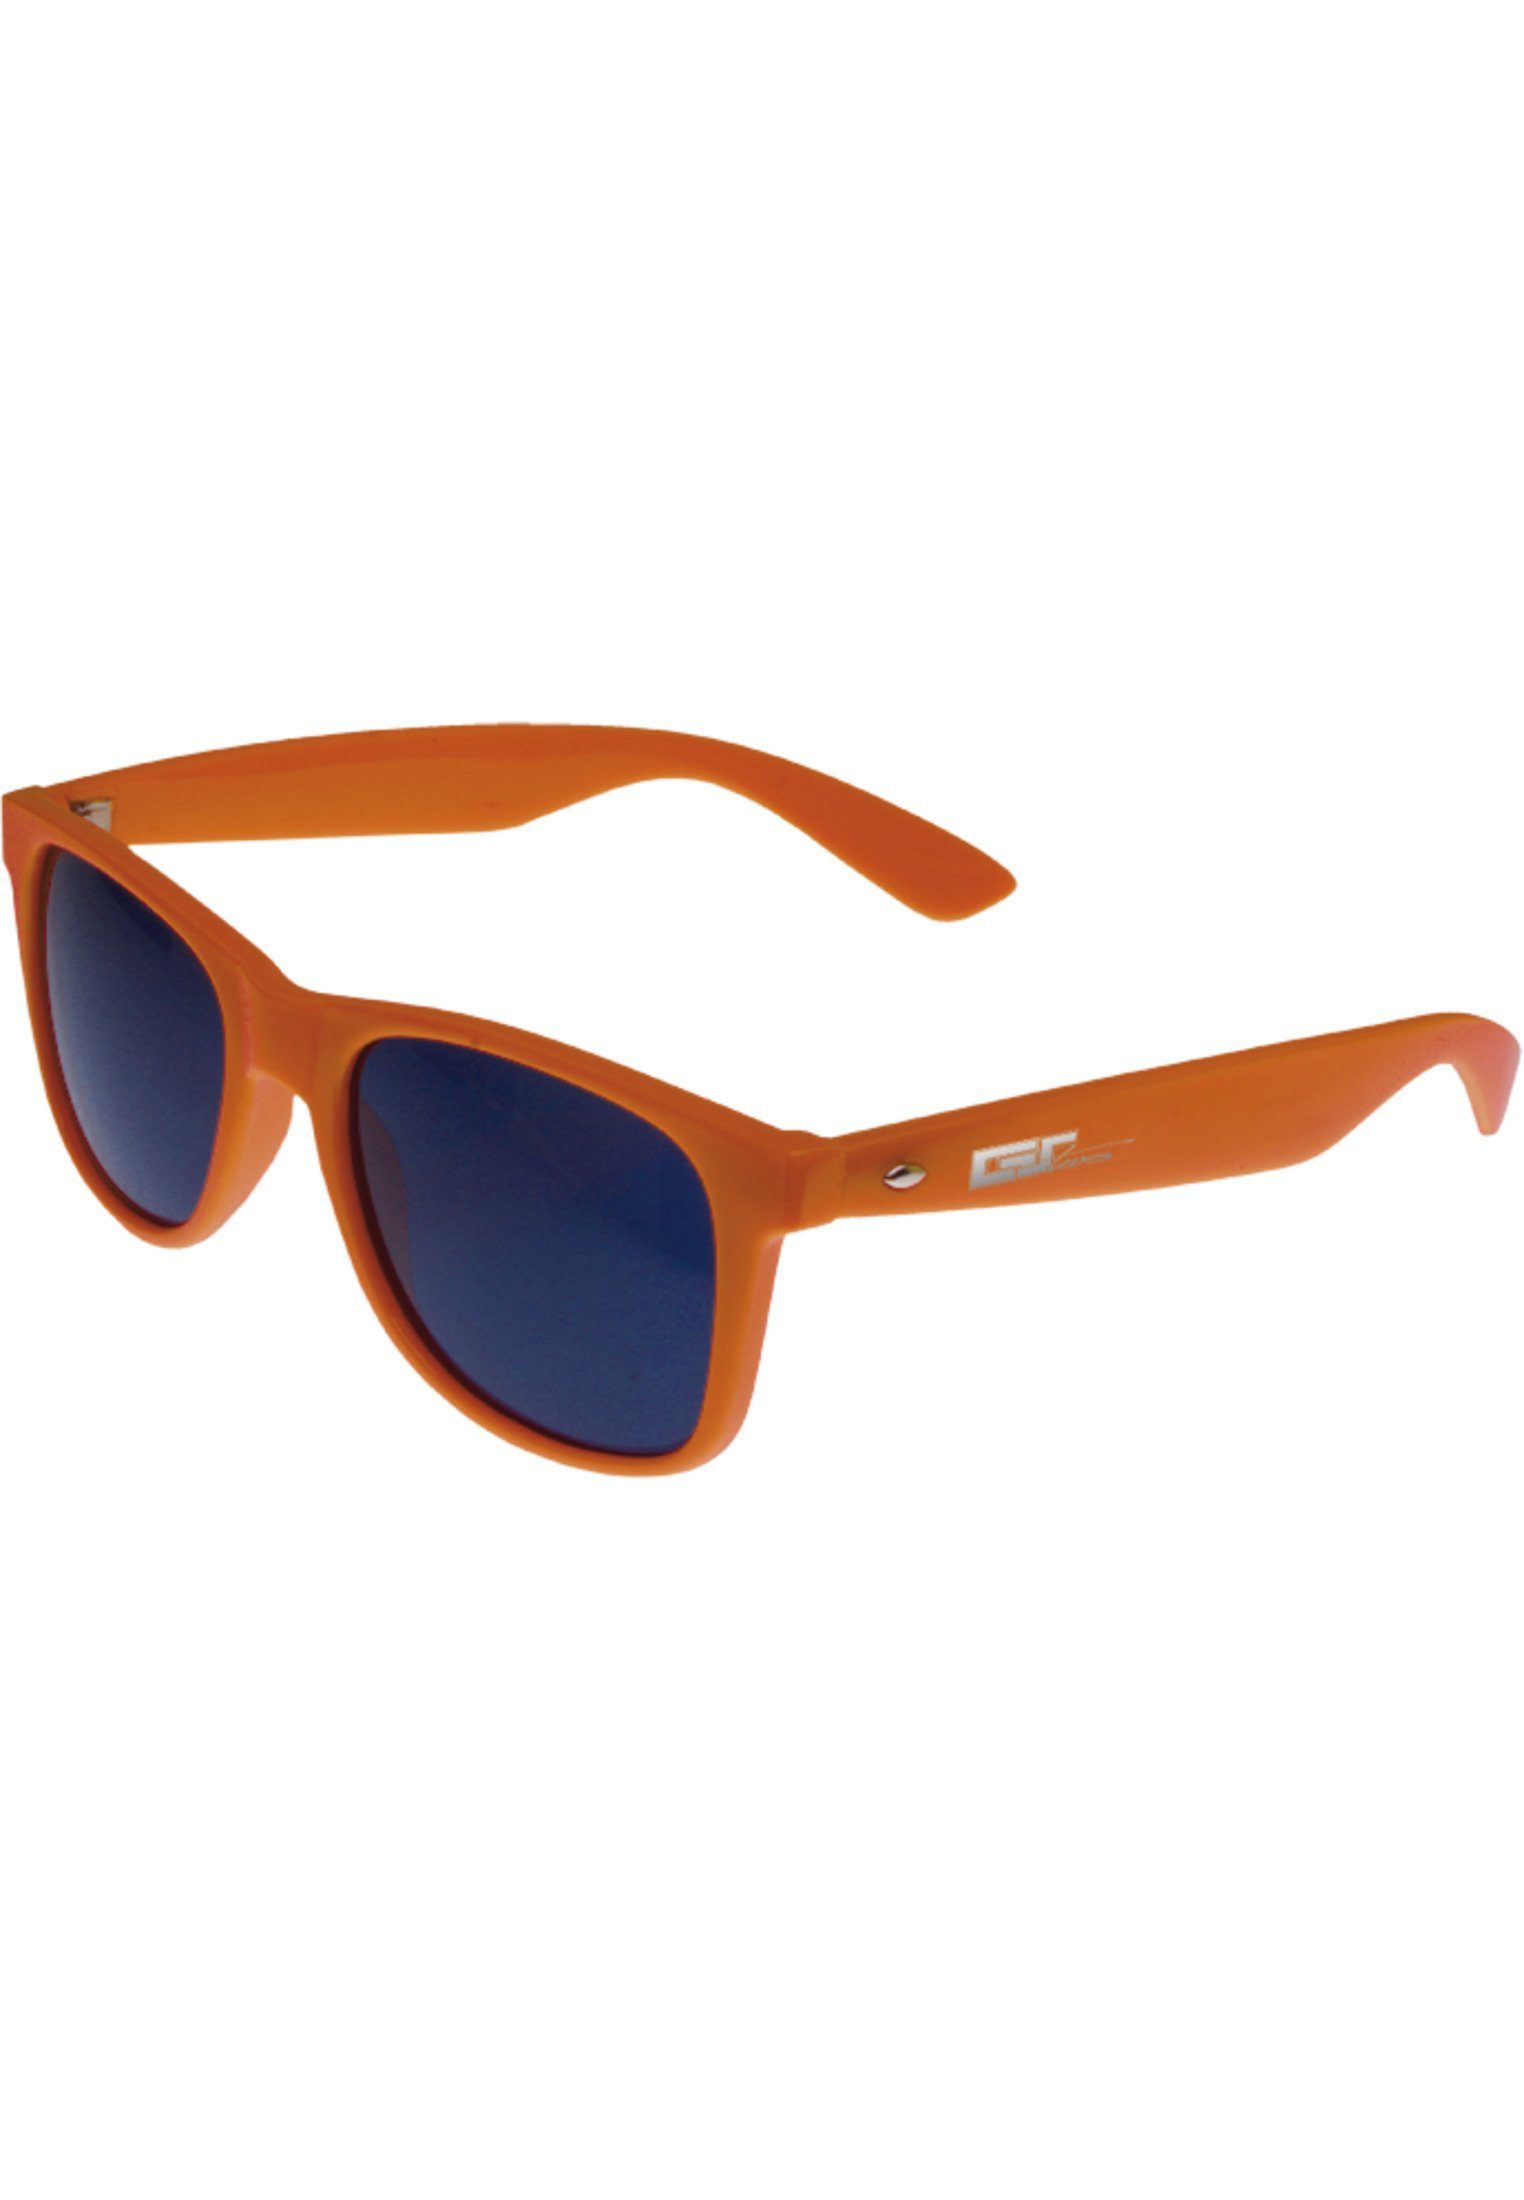 MSTRDS Sonnenbrille Accessoires Groove Shades GStwo orange | Sonnenbrillen